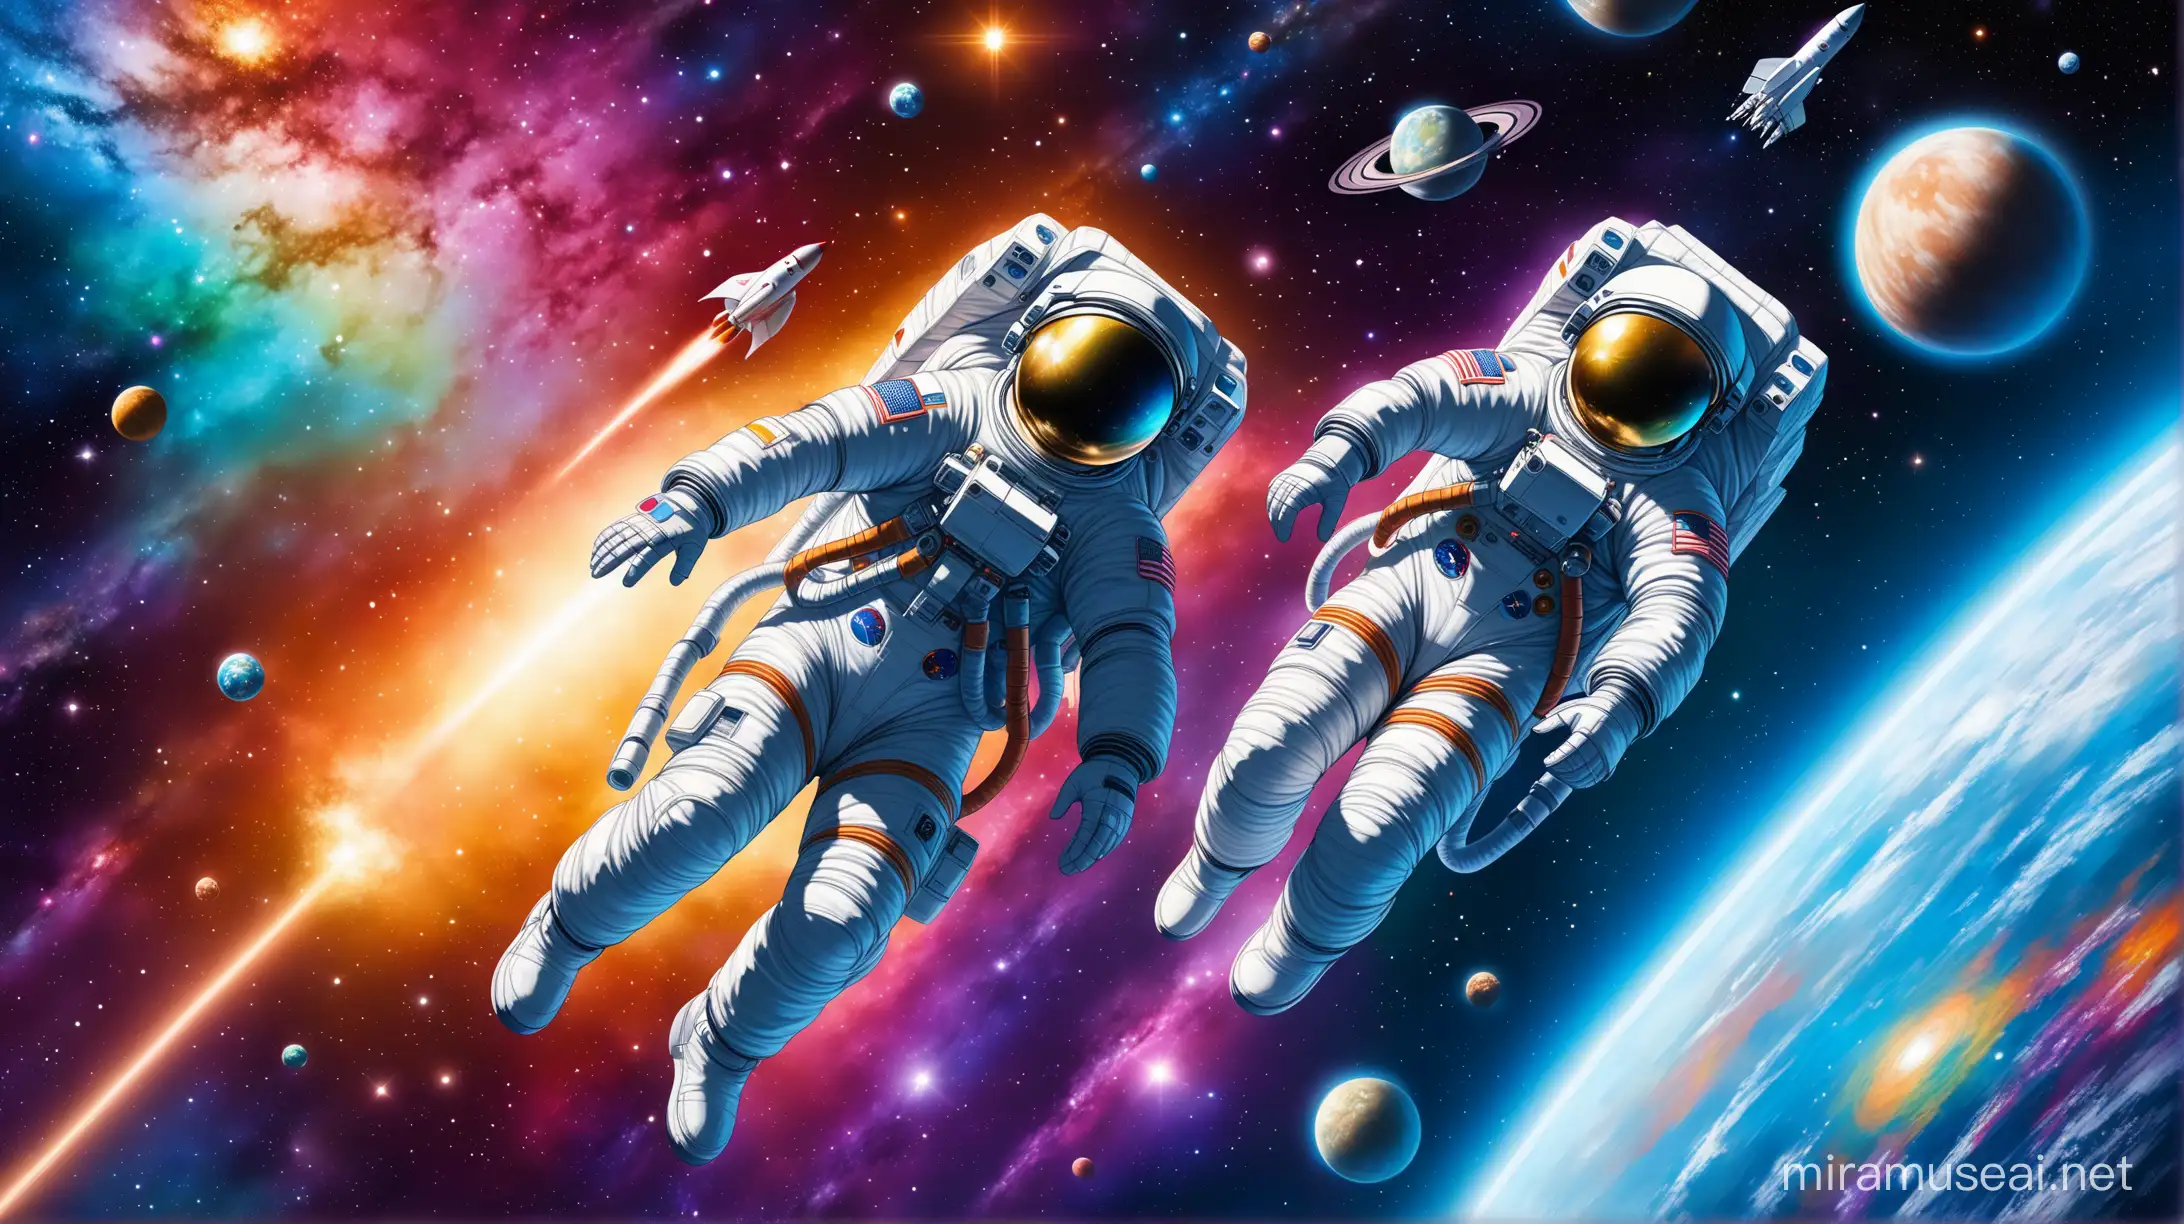 Astronaut Duo in a Vivid Cosmic Wonderland